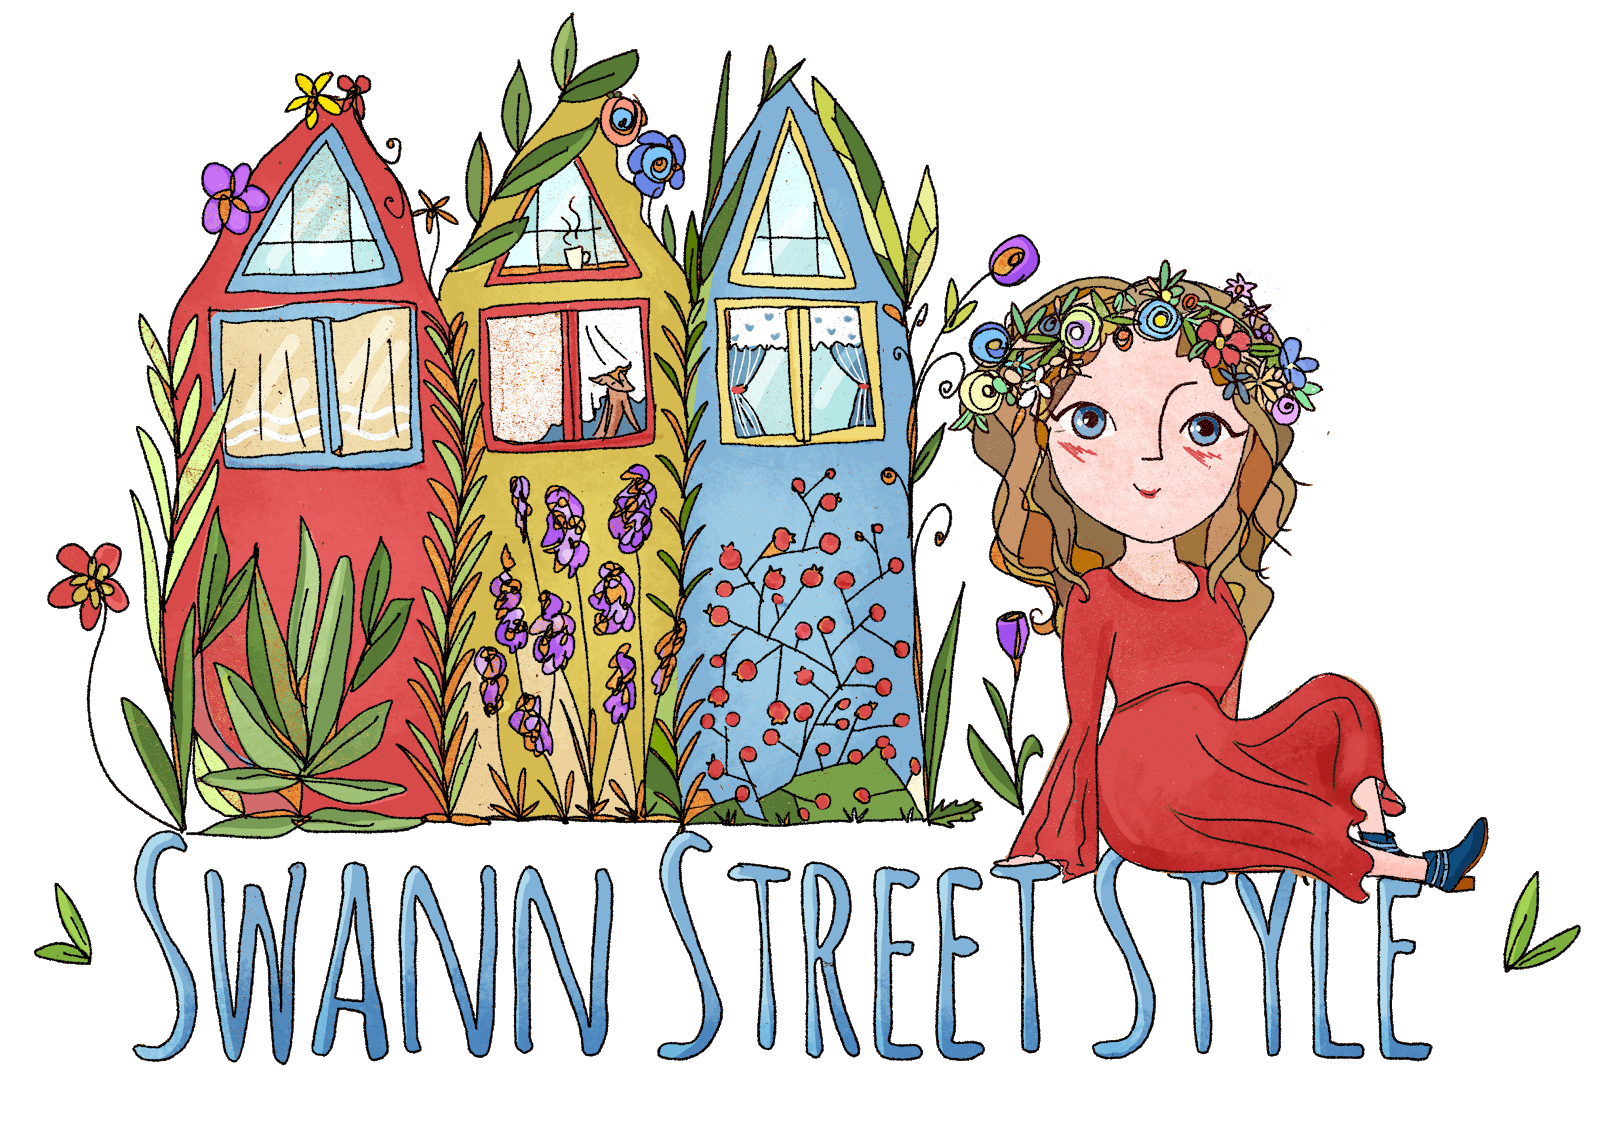 Swann Street Style